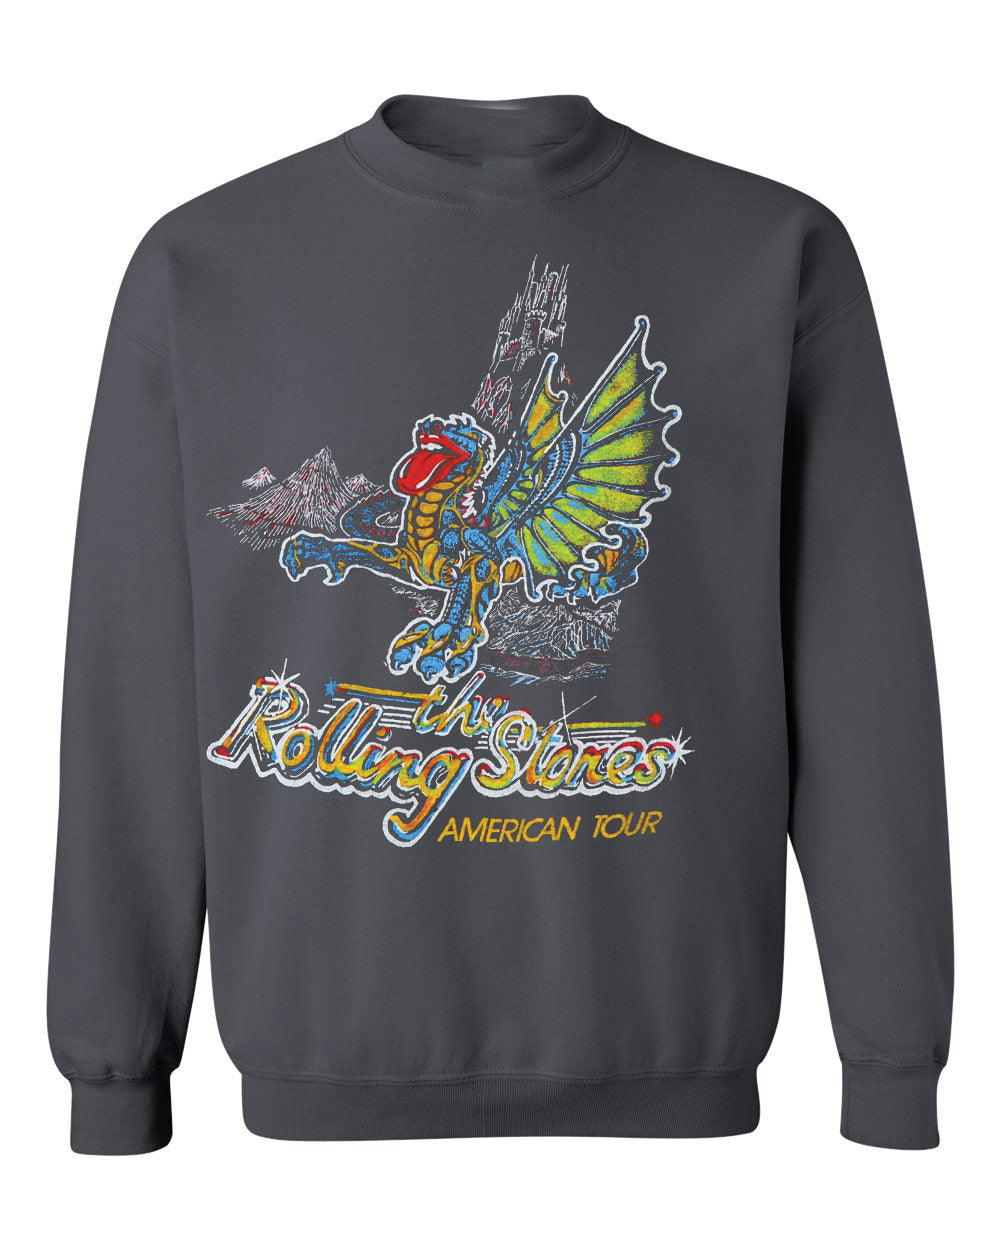 Rolling Stones American Dragon Tour Charcoal Thrifted Sweatshirt - shoplivylu